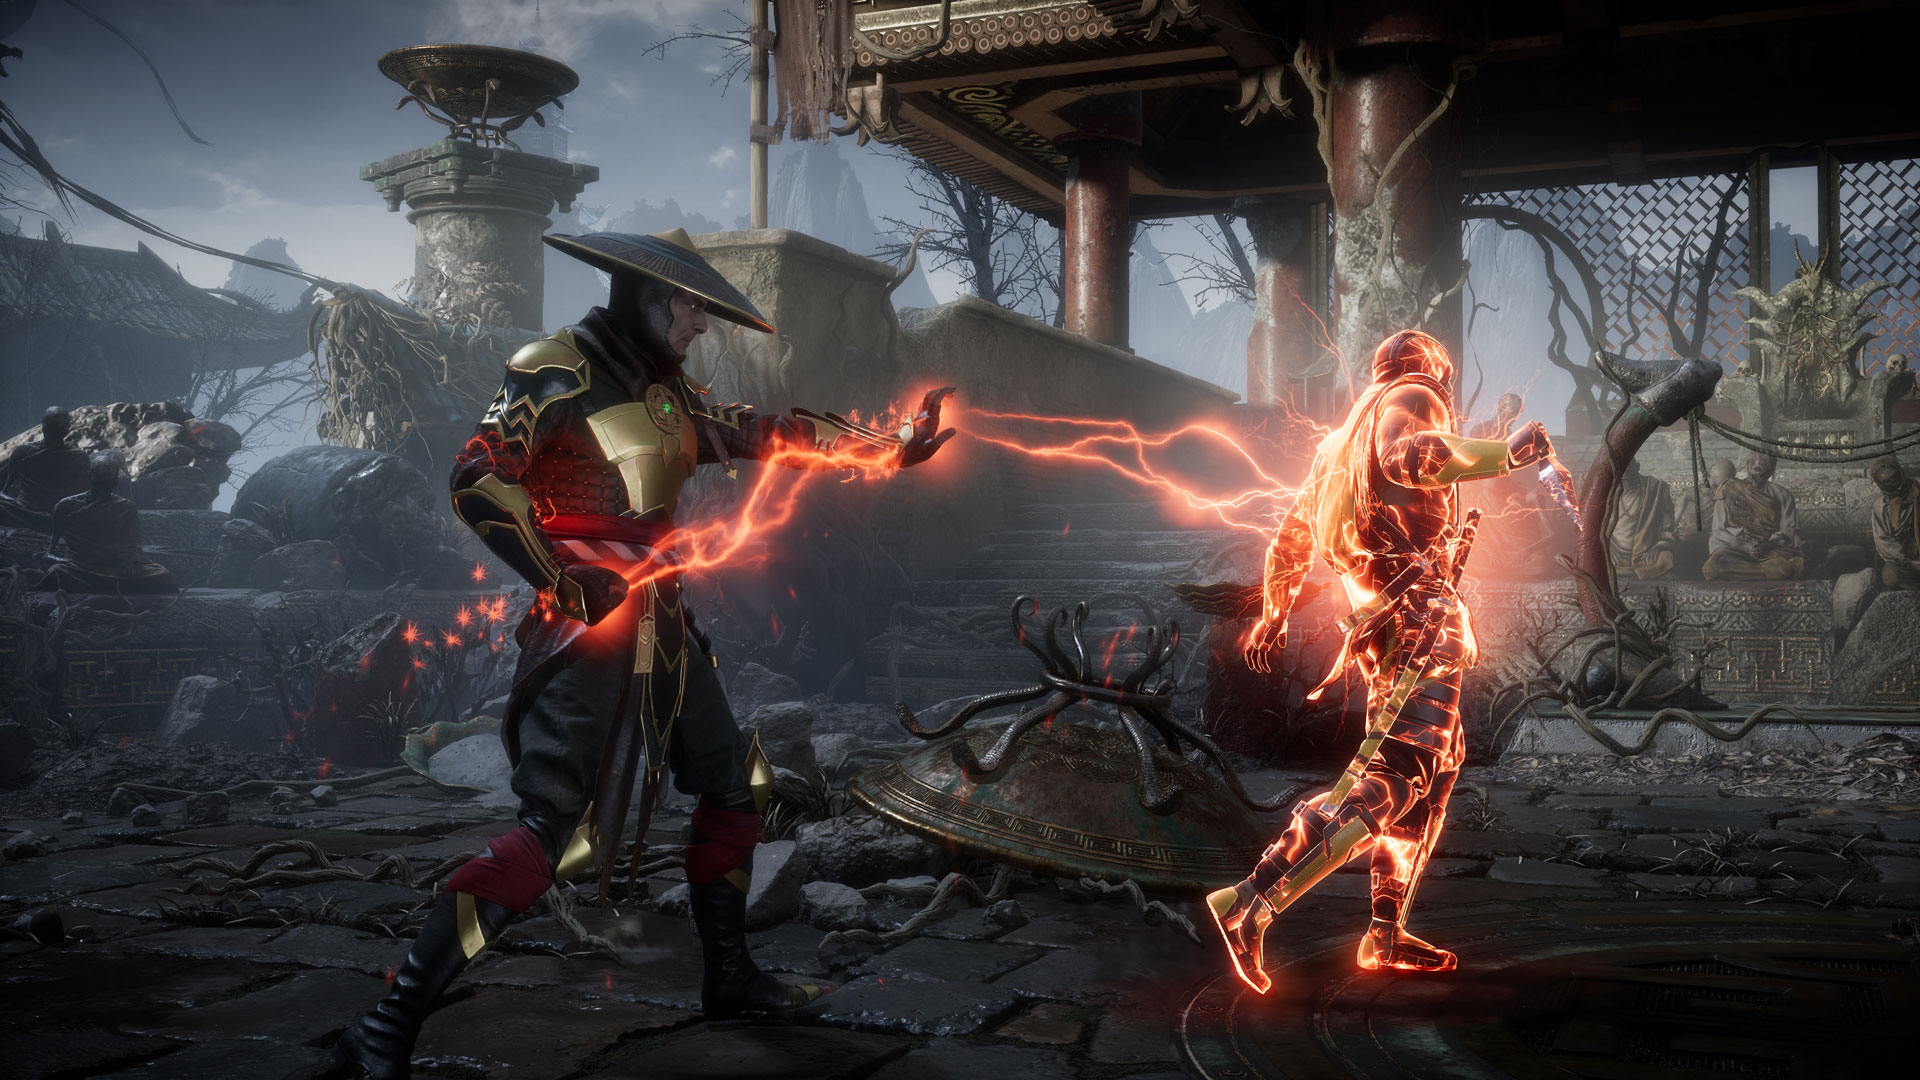 Kupit Mortal Kombat 11 Premium Edition Licenzionnyj Pc Klyuch Aktivacii V Servise Steam Igromagaz